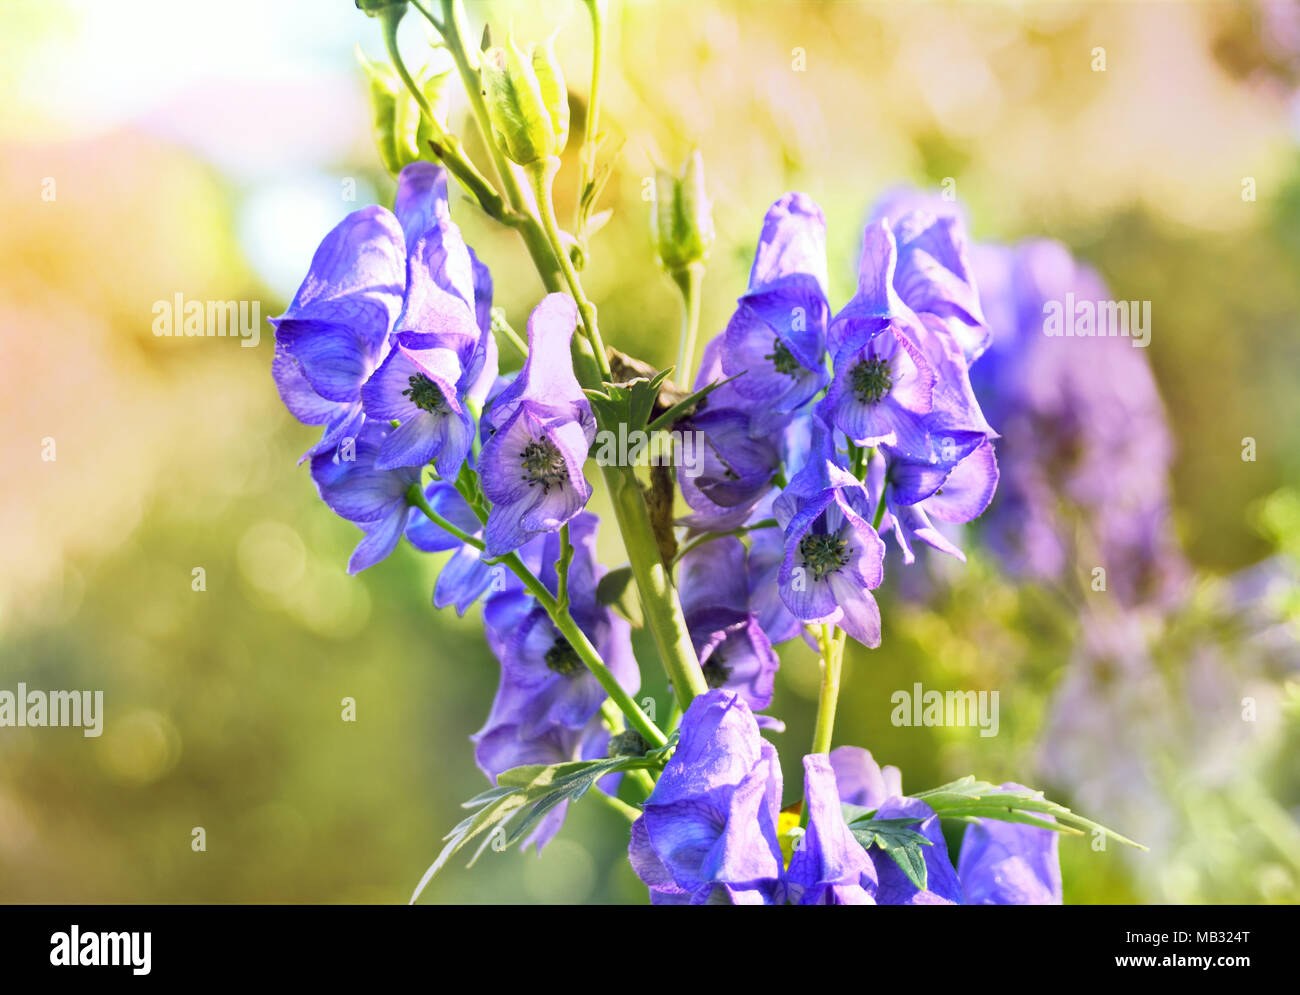 Blue helmet flower or aconite flower in the sunlight. Closeup shot of purple flowers. Stock Photo